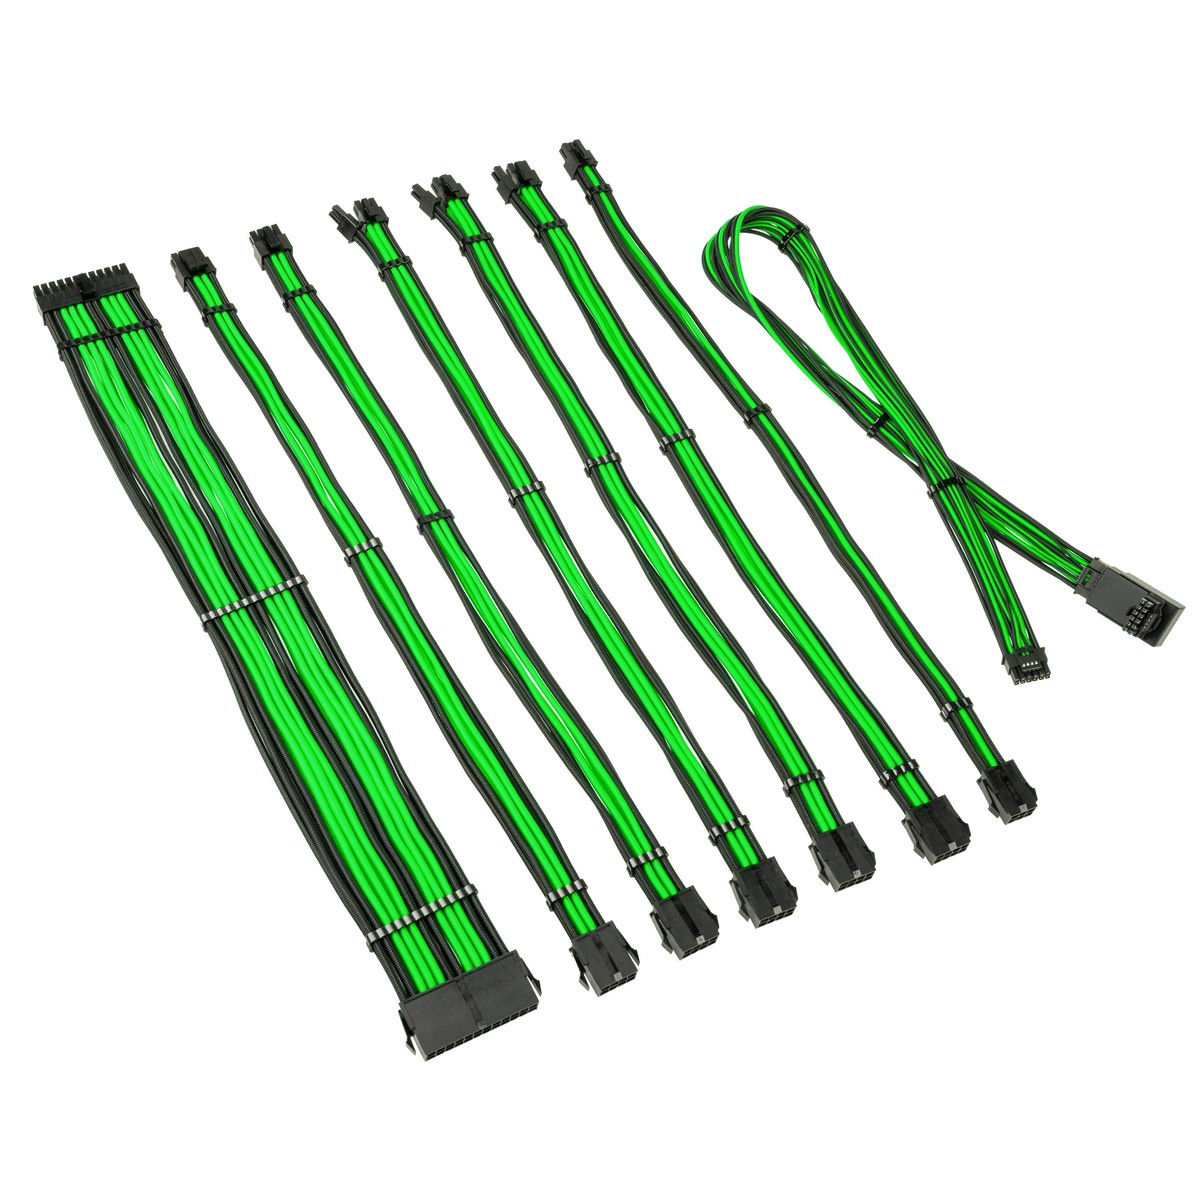 Kolink - Kolink Core Pro Braided Cable Extension Kit 12VHWPR Type 1 - Venom Green